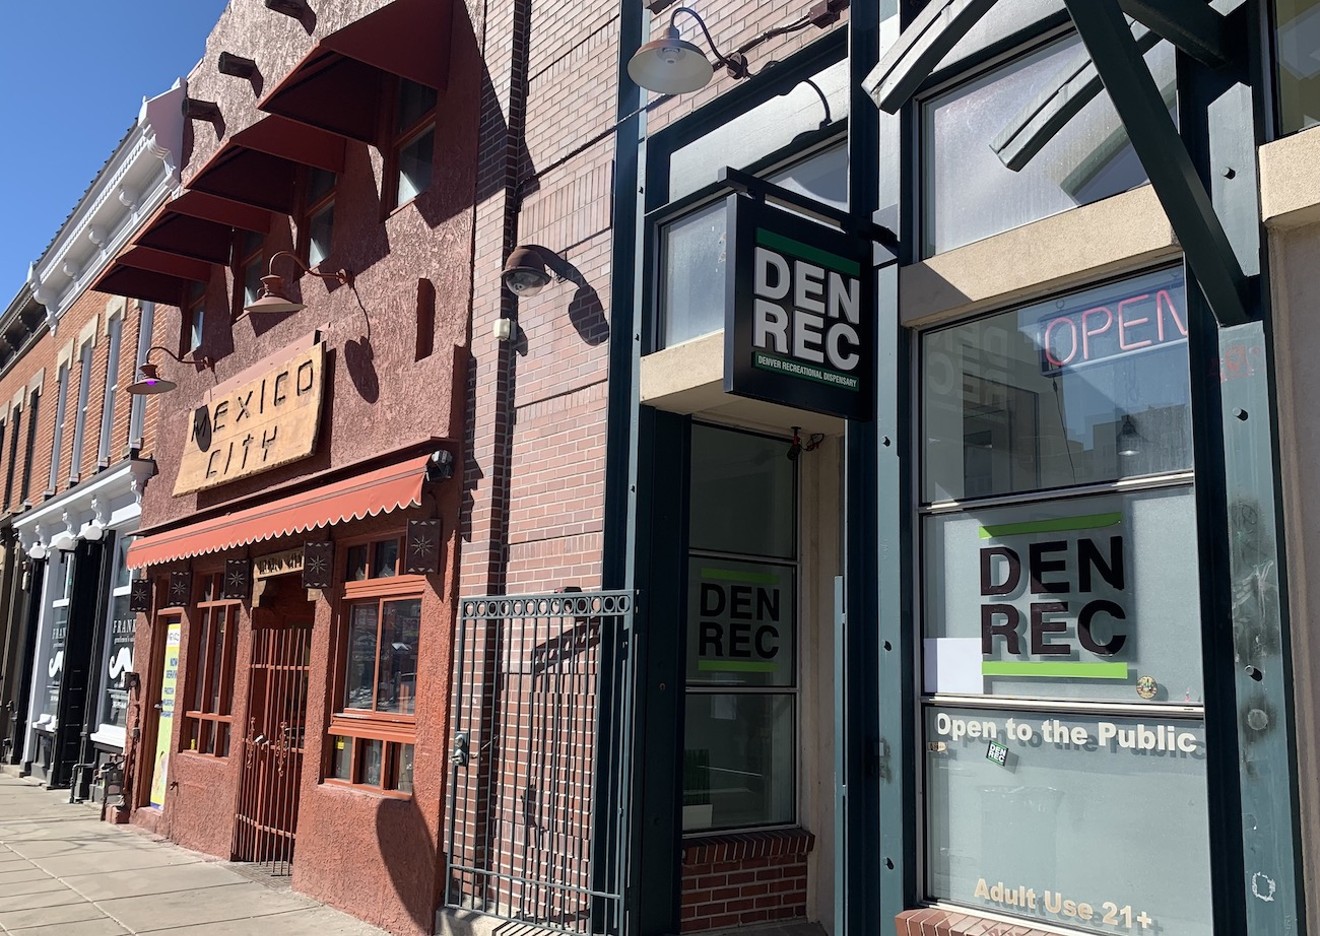 Den-Rec operates two dispensaries in Denver.